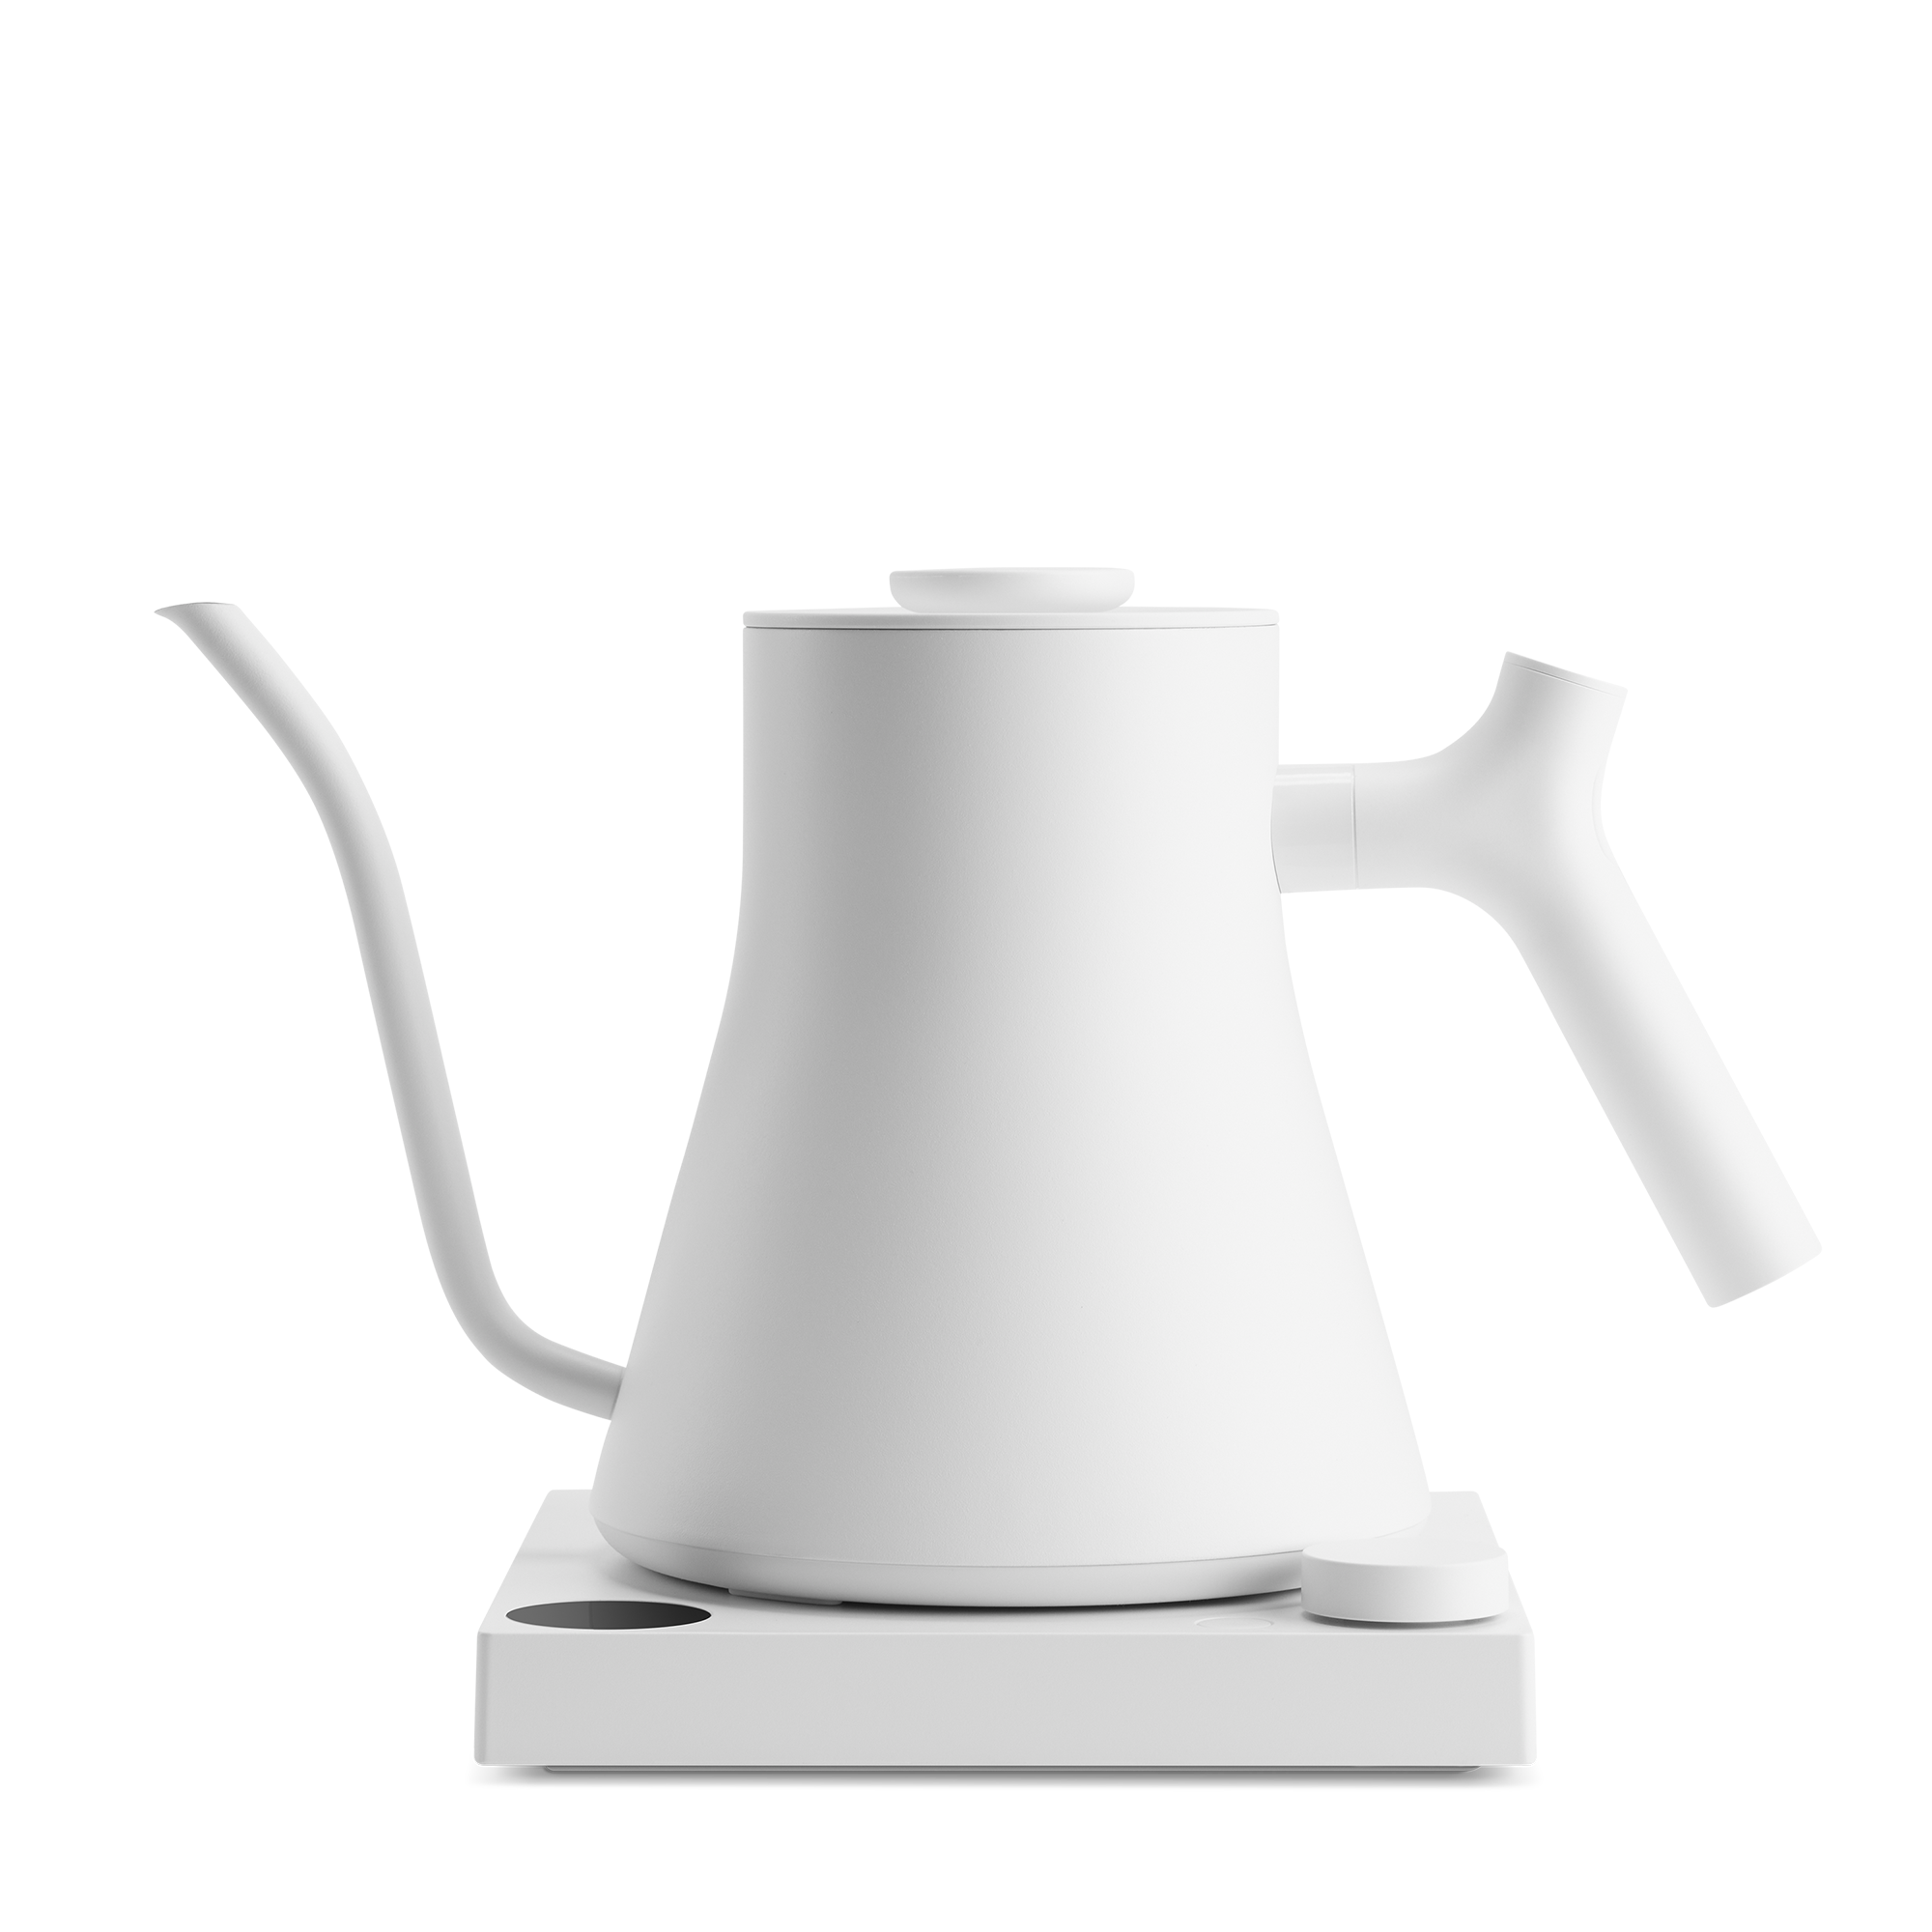 Gamechanger! Reviewing the VEKTRA kettle for Tea 